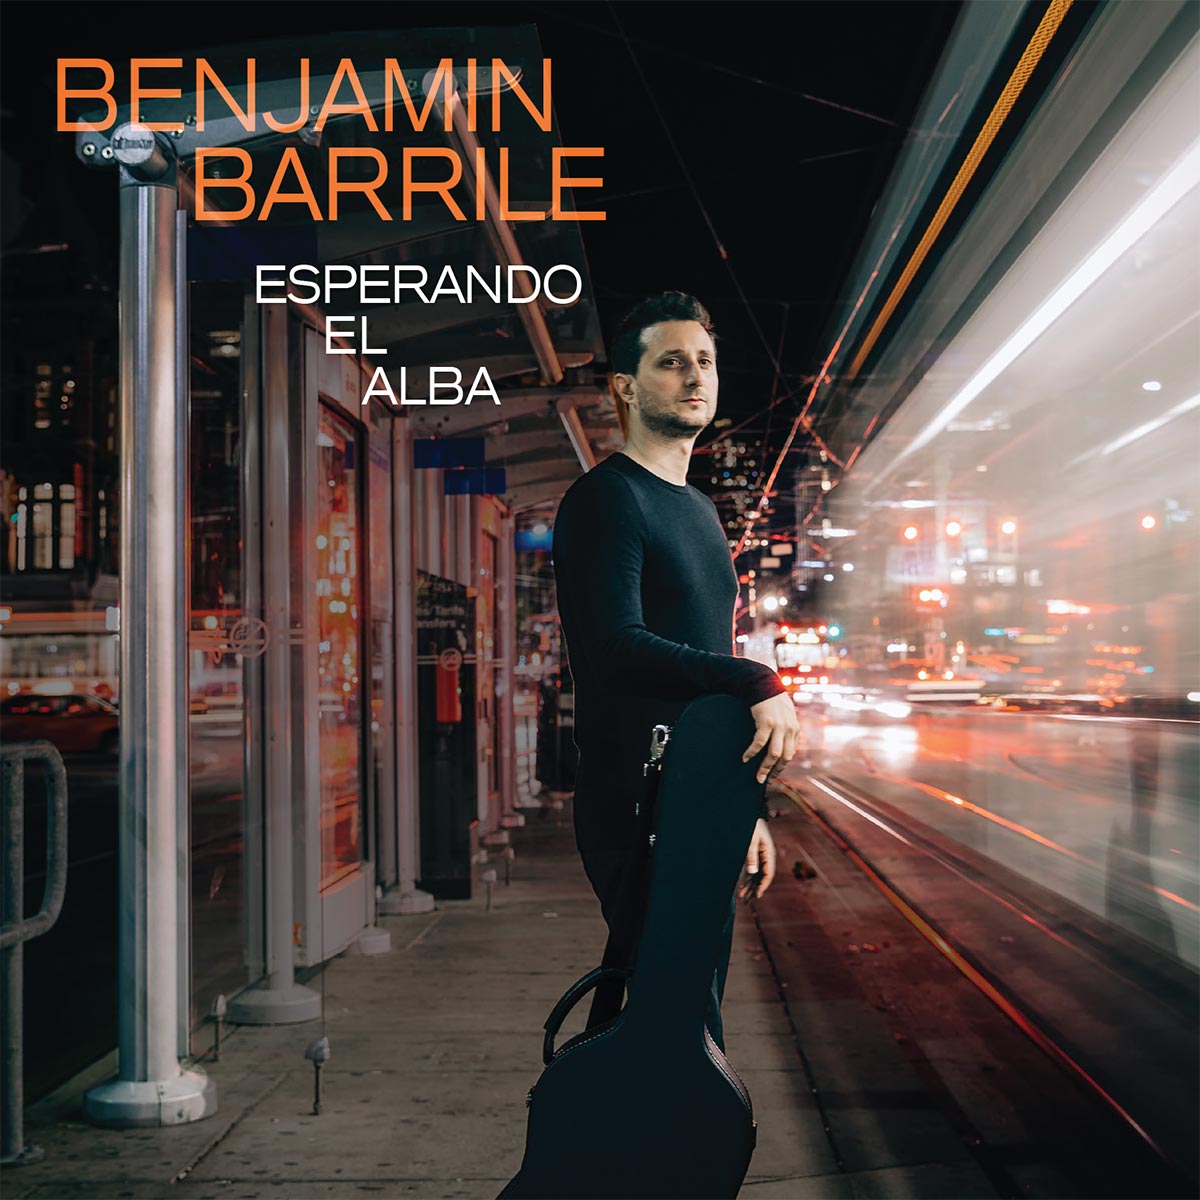 Benjamin Barrile - Esperando El Alba - Album art